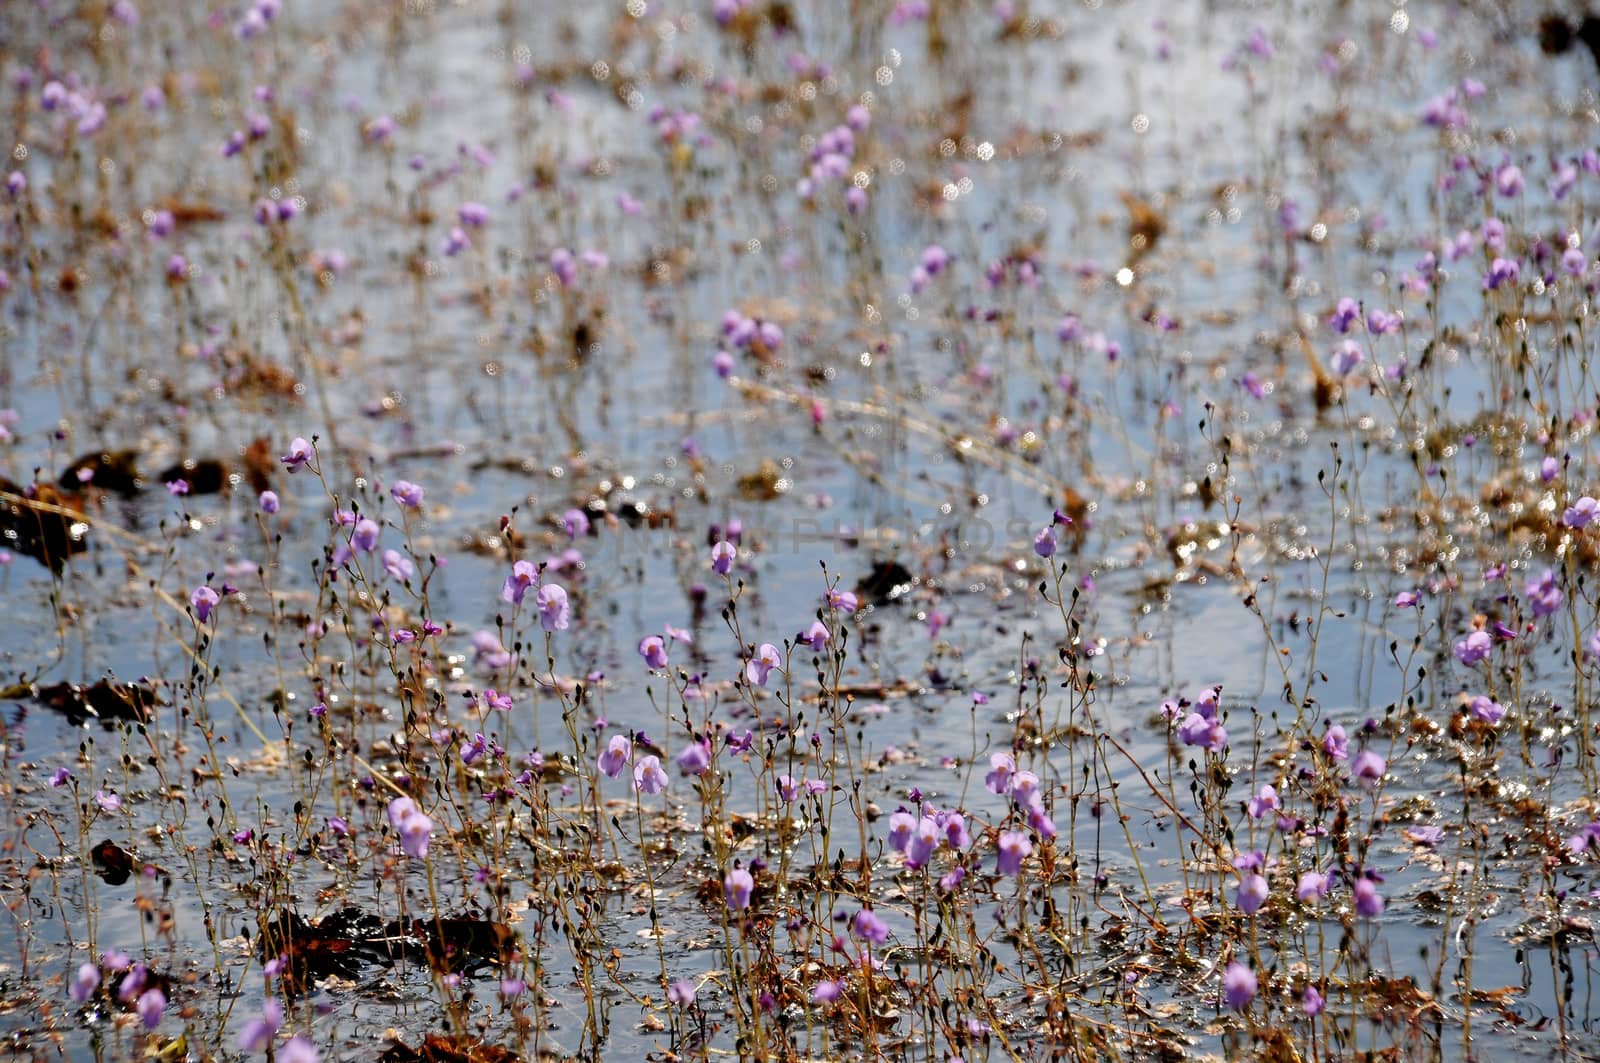 golden bladderwort or Utricularia aurea at Lake Thale Noi Waterfowl Reserve, Khuan Khanun, Thailand by ideation90